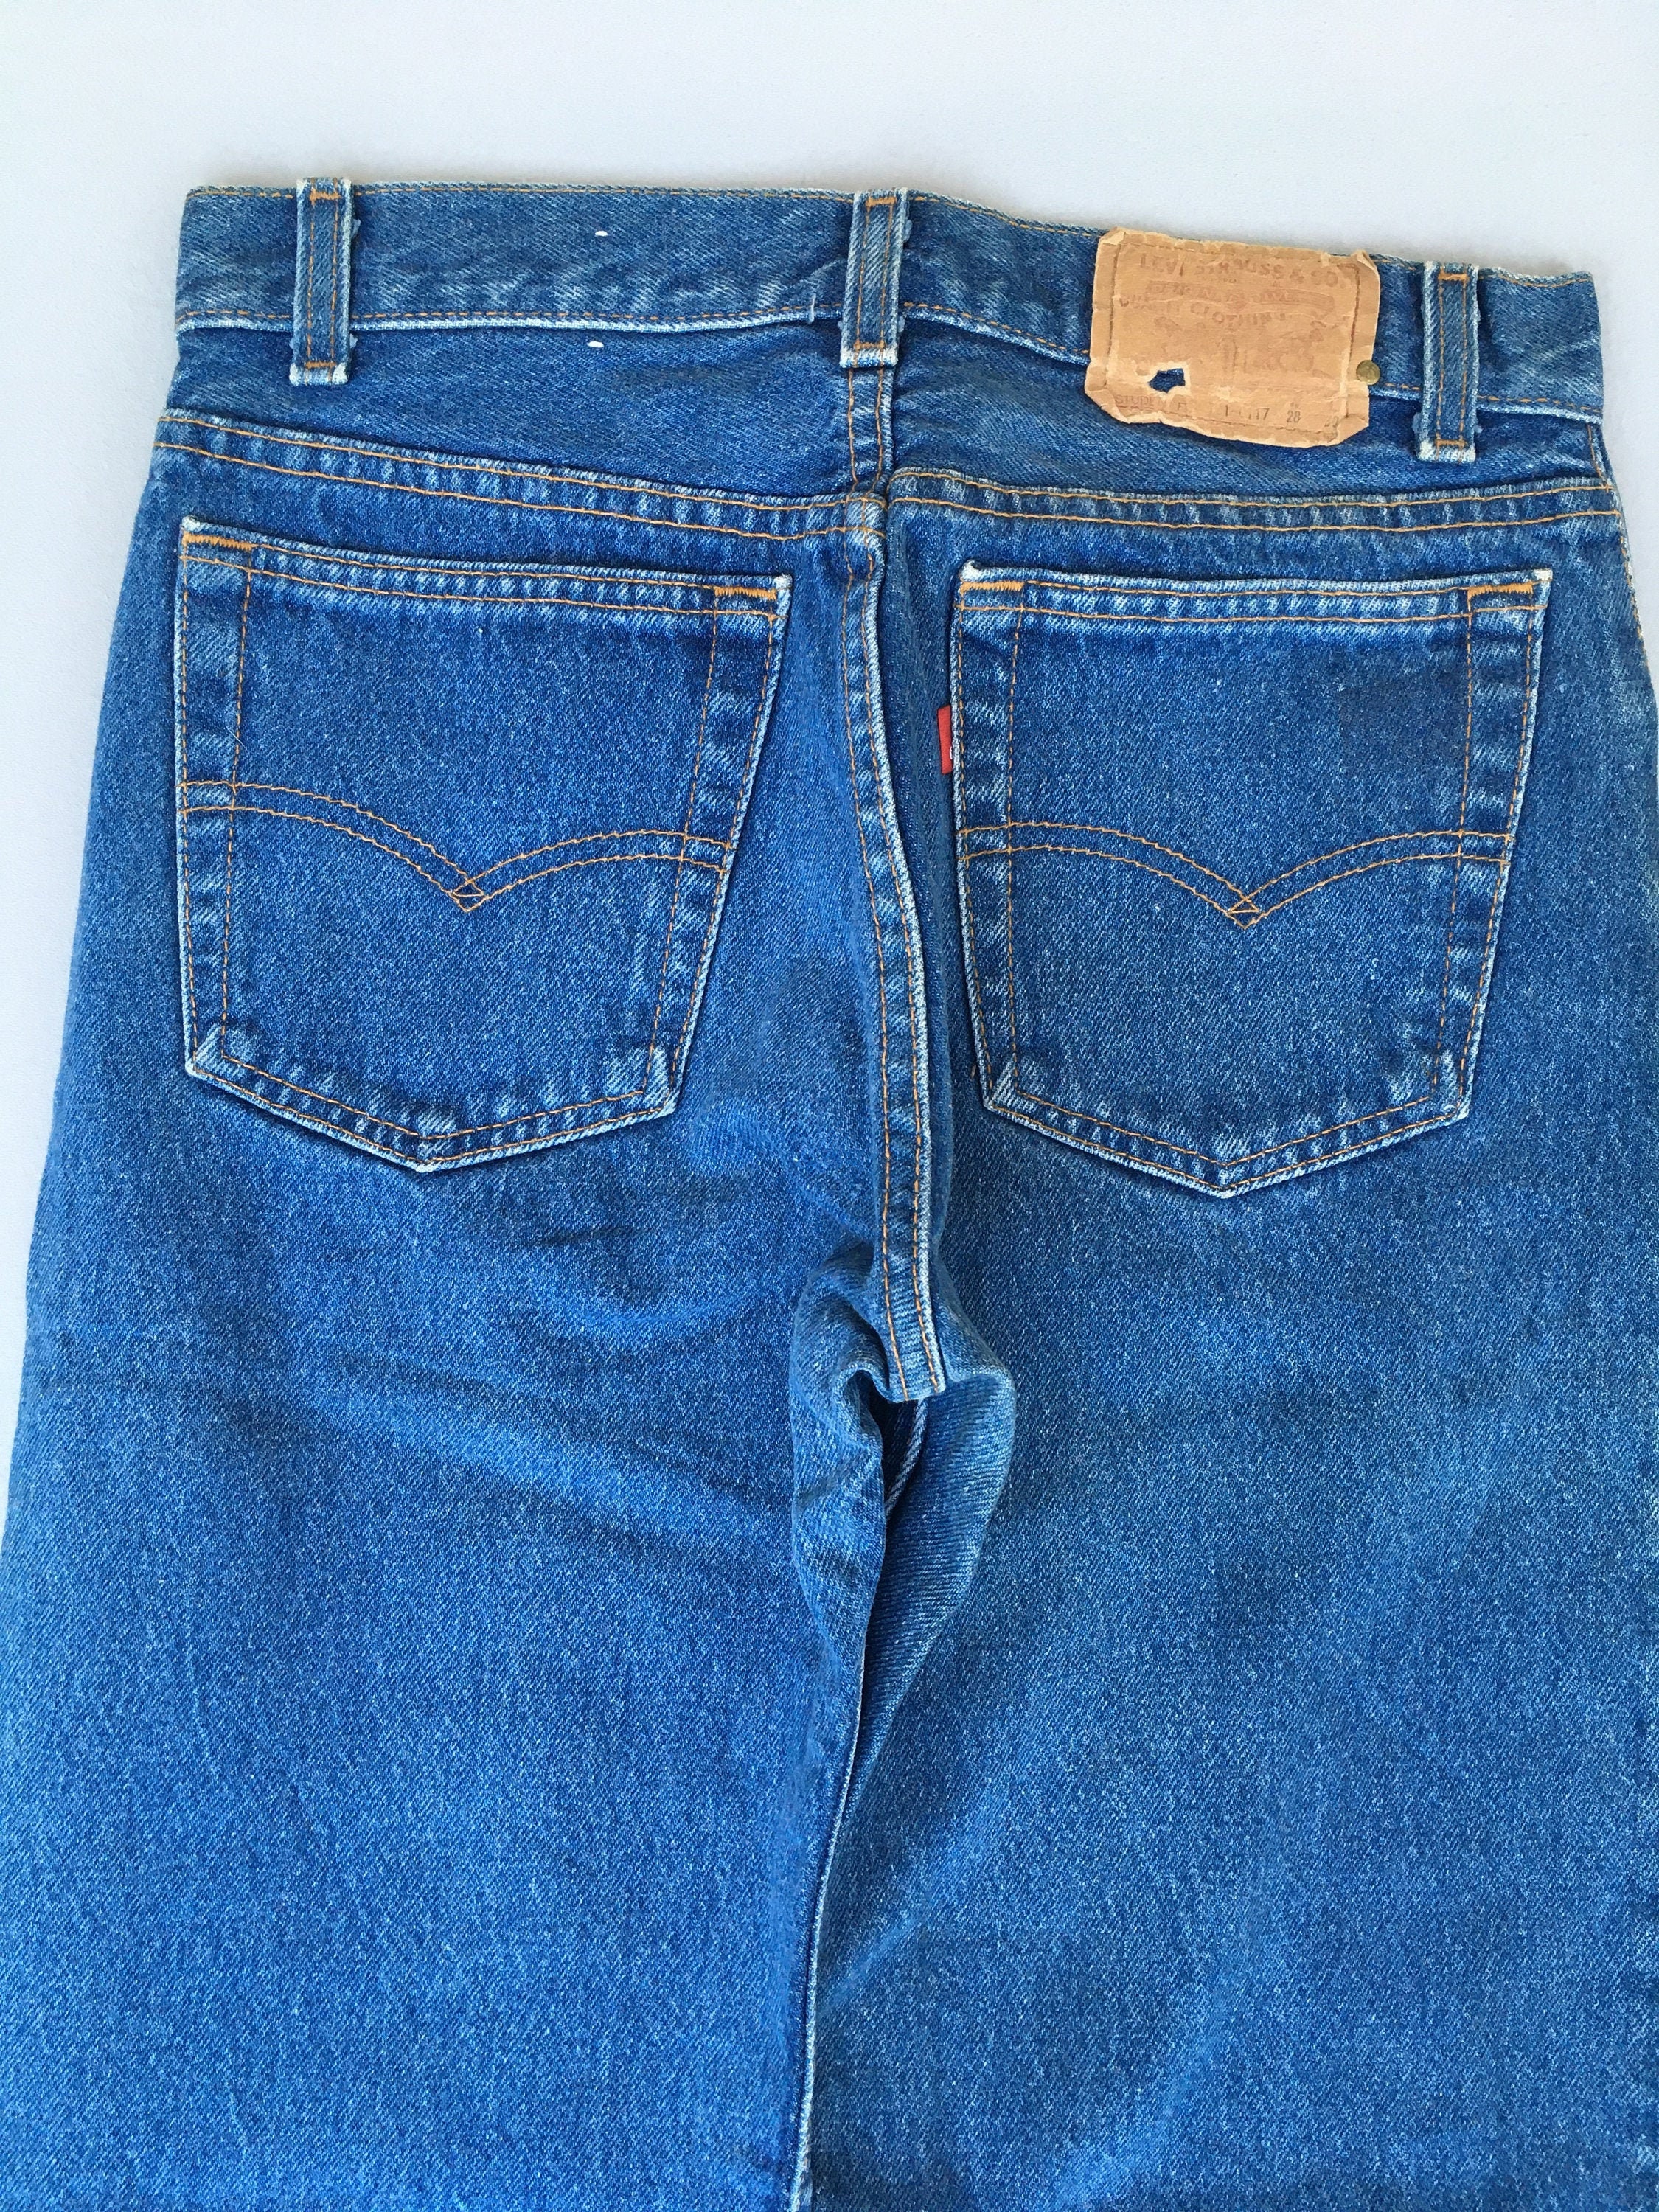 Size 27x27.5 Vintage Levis 701 Student Jeans Light Washed Jeans